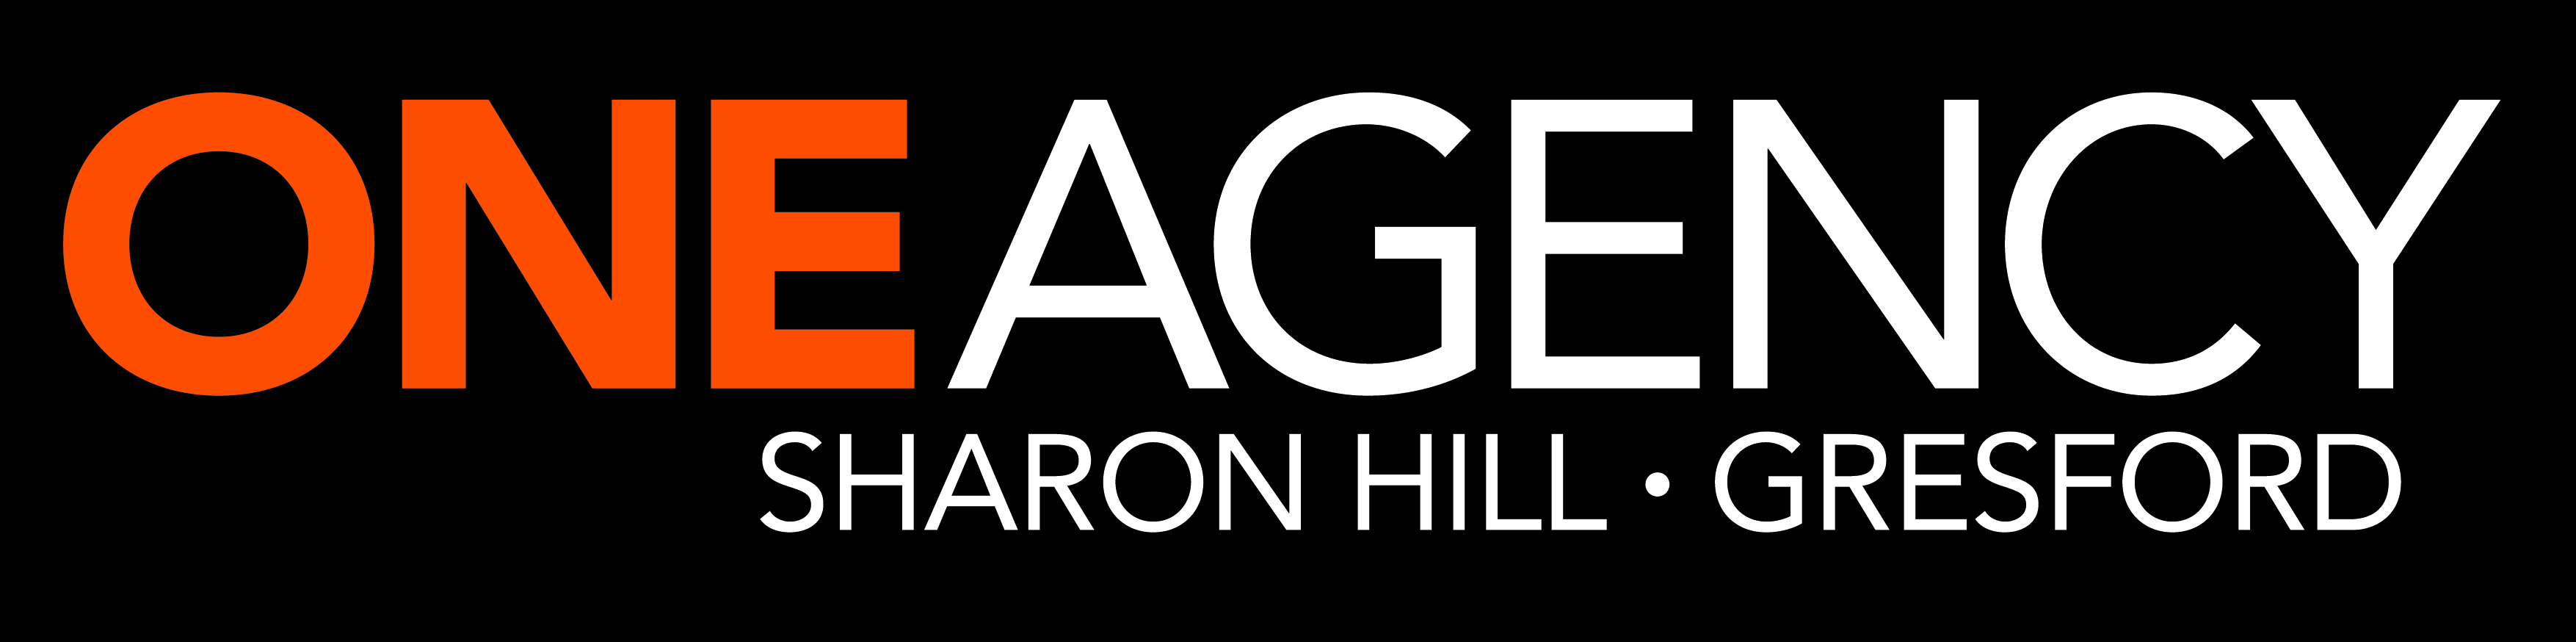 One Agency Sharon Hill - Gresford Logo